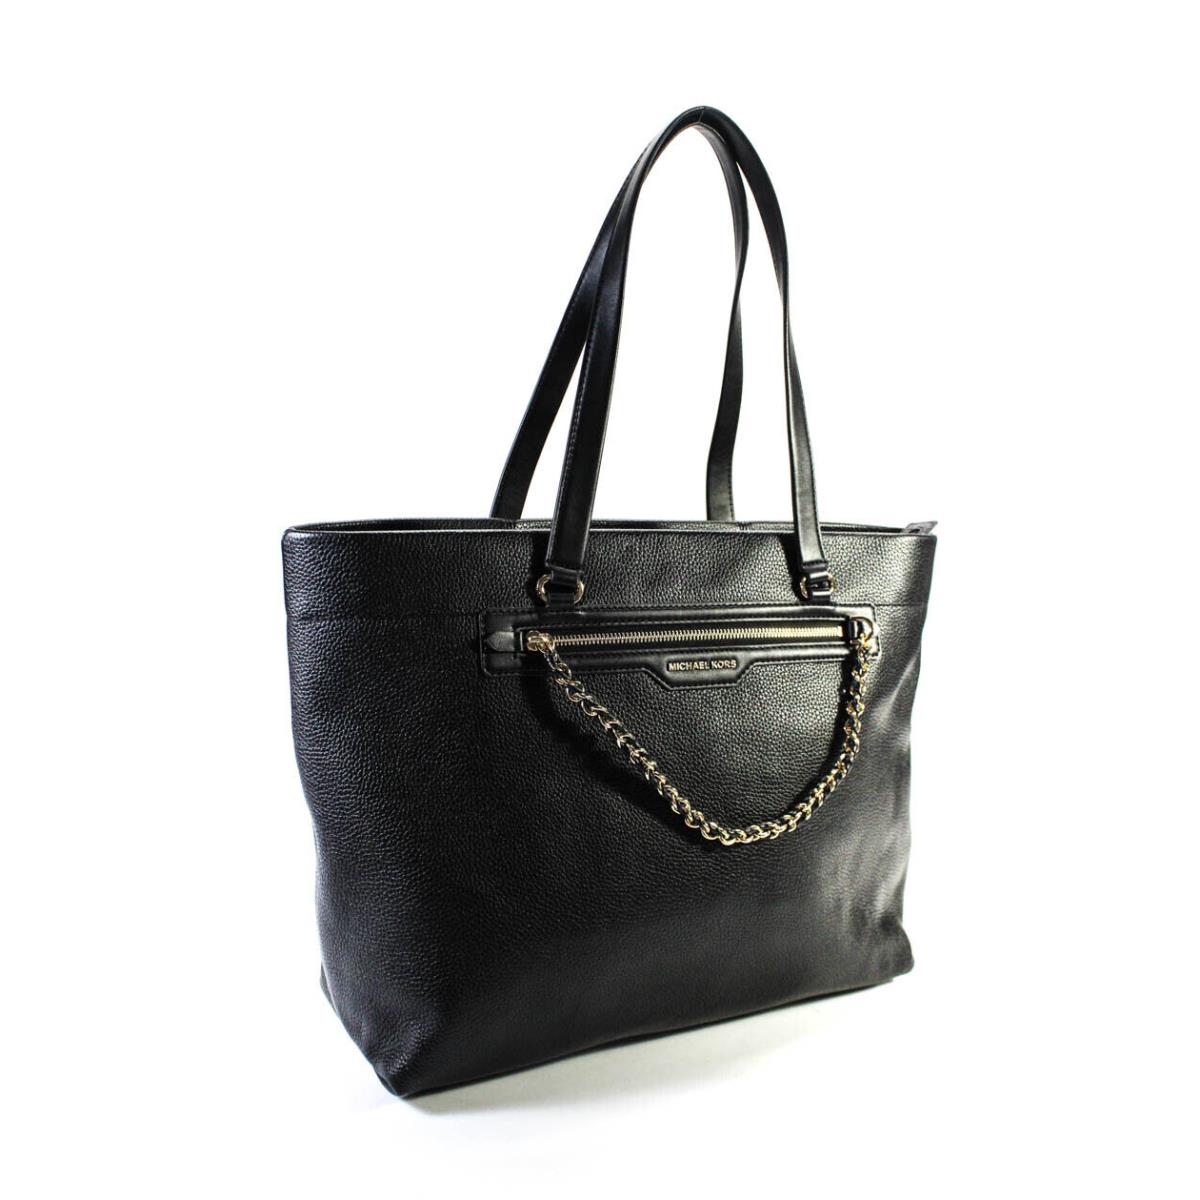 Kors Womens Black Leather Large Tz Tote Bag Handbag